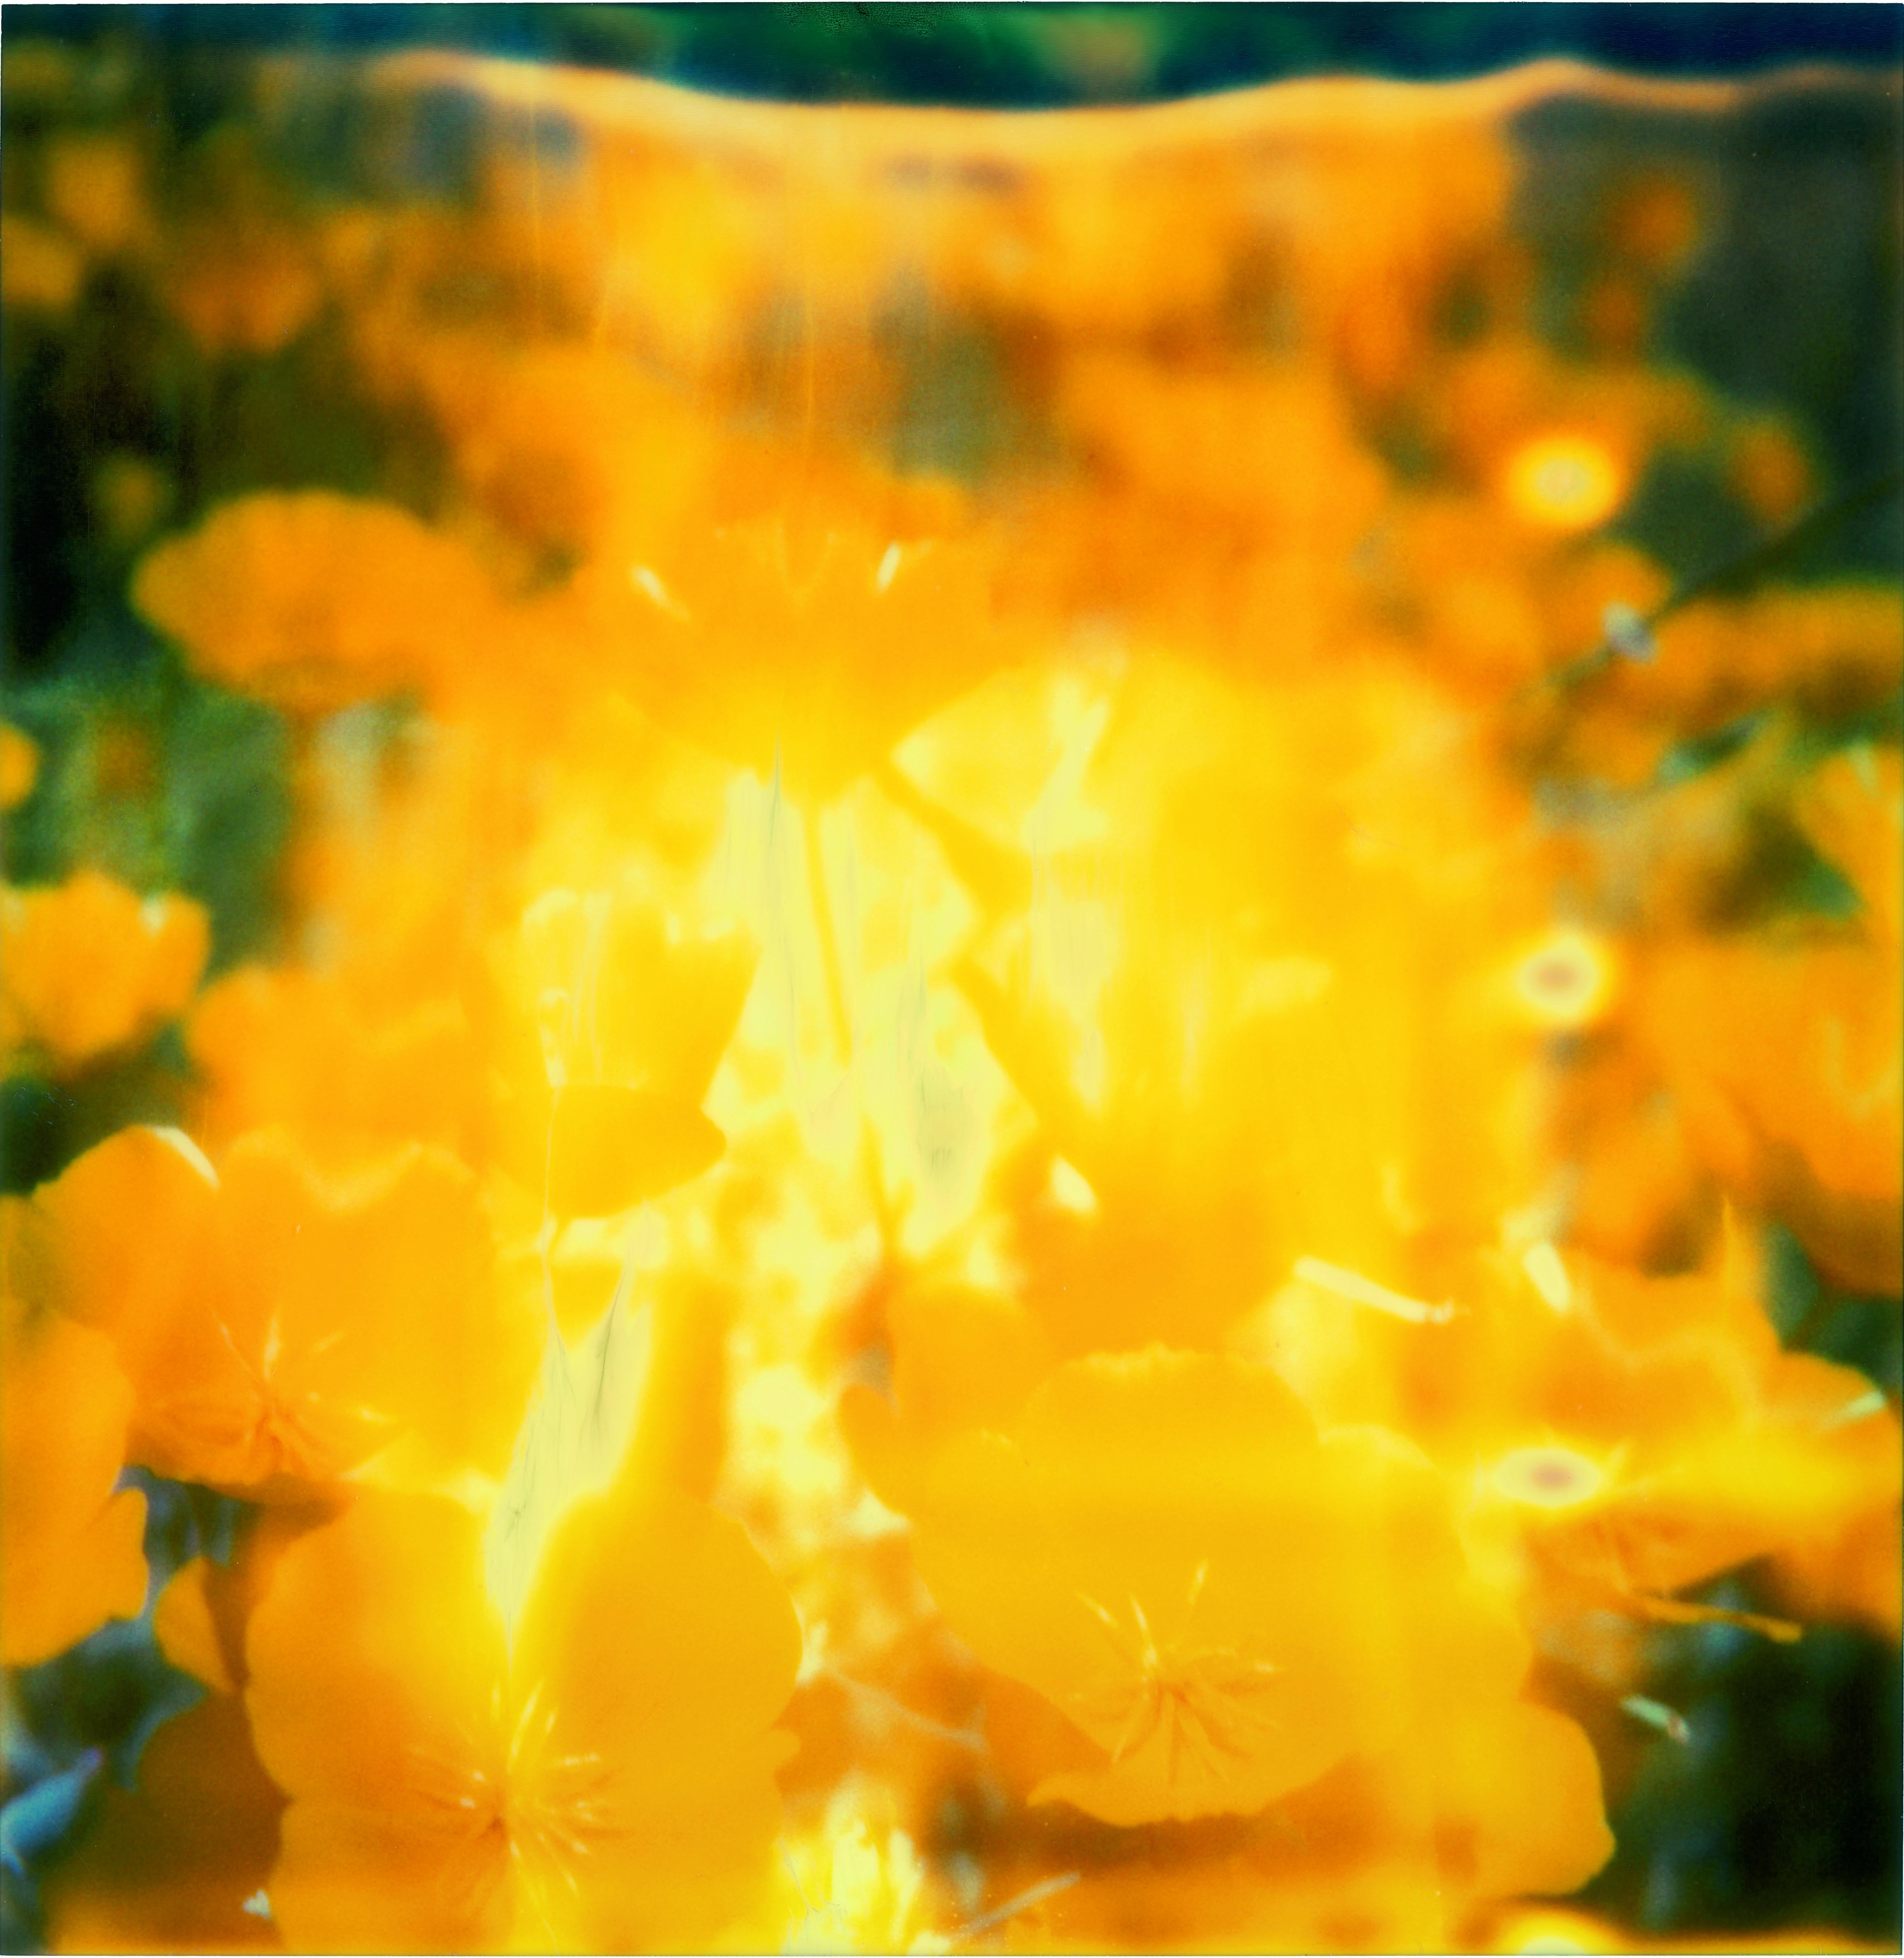 Stefanie Schneider Abstract Photograph - Yellow Flower (The Last Picture Show) Polaroid, 128x126cm, analog vintage print